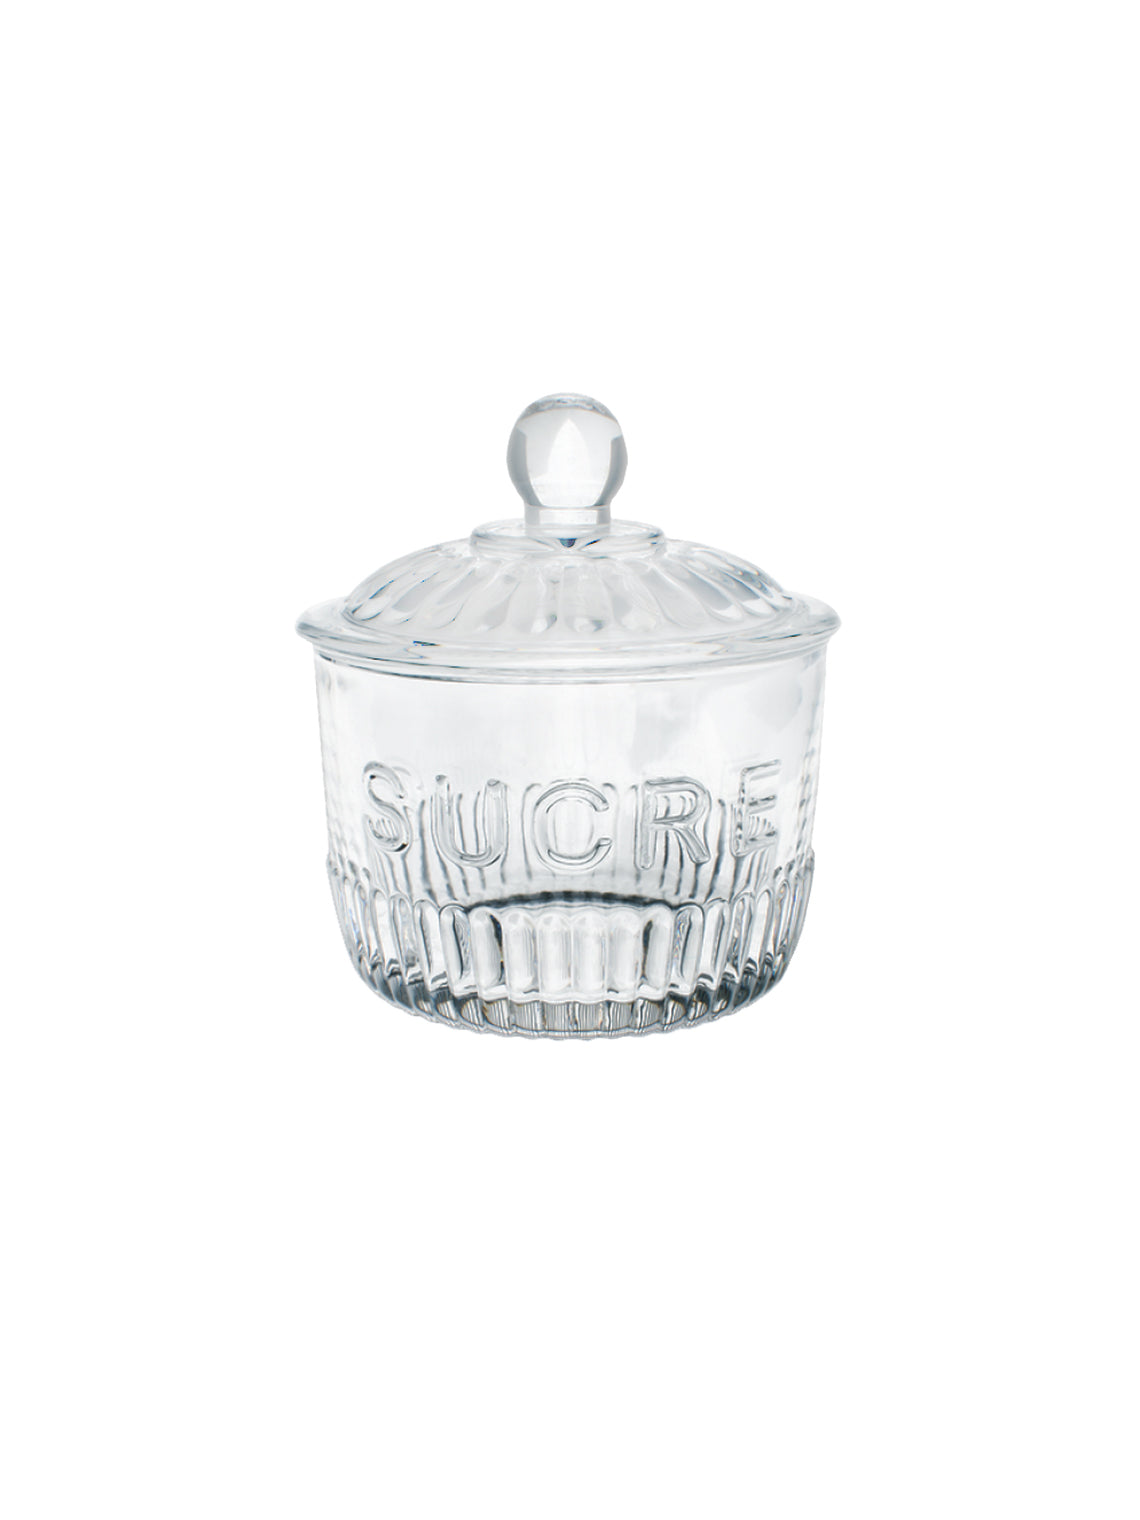 Sugar Glass Jar "Sucre"